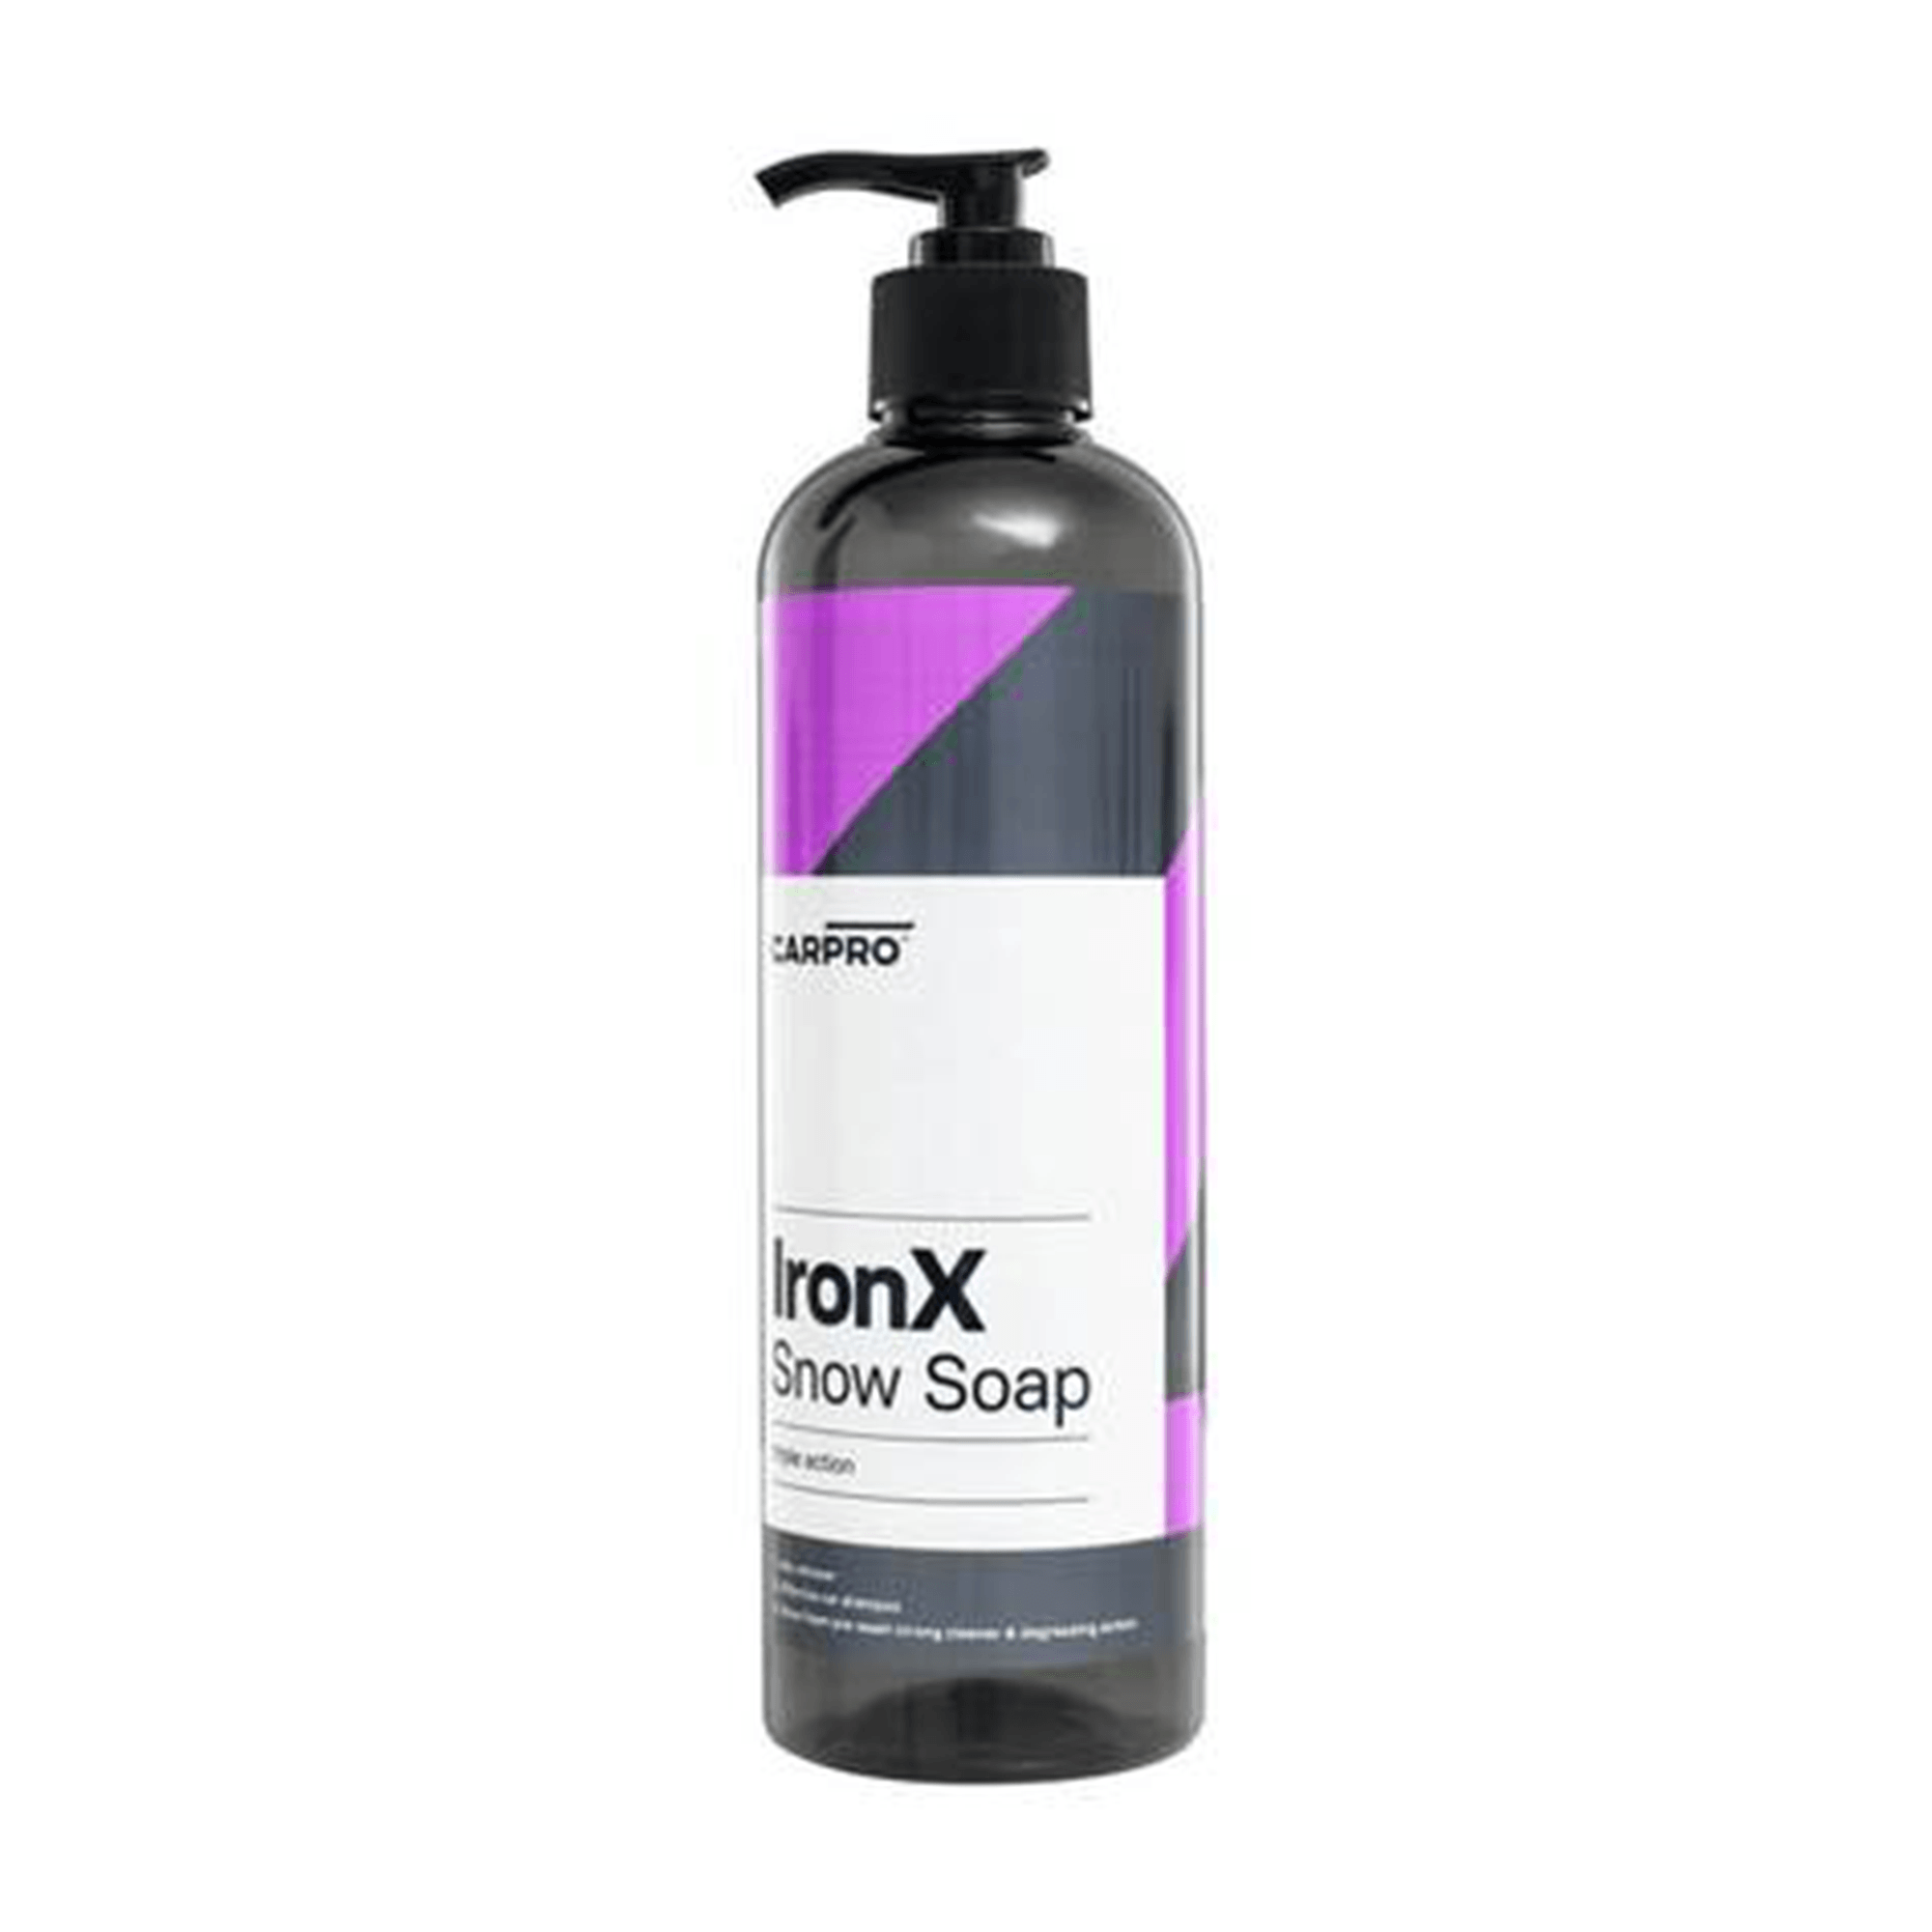 CarPro Iron X Snow Soap Review